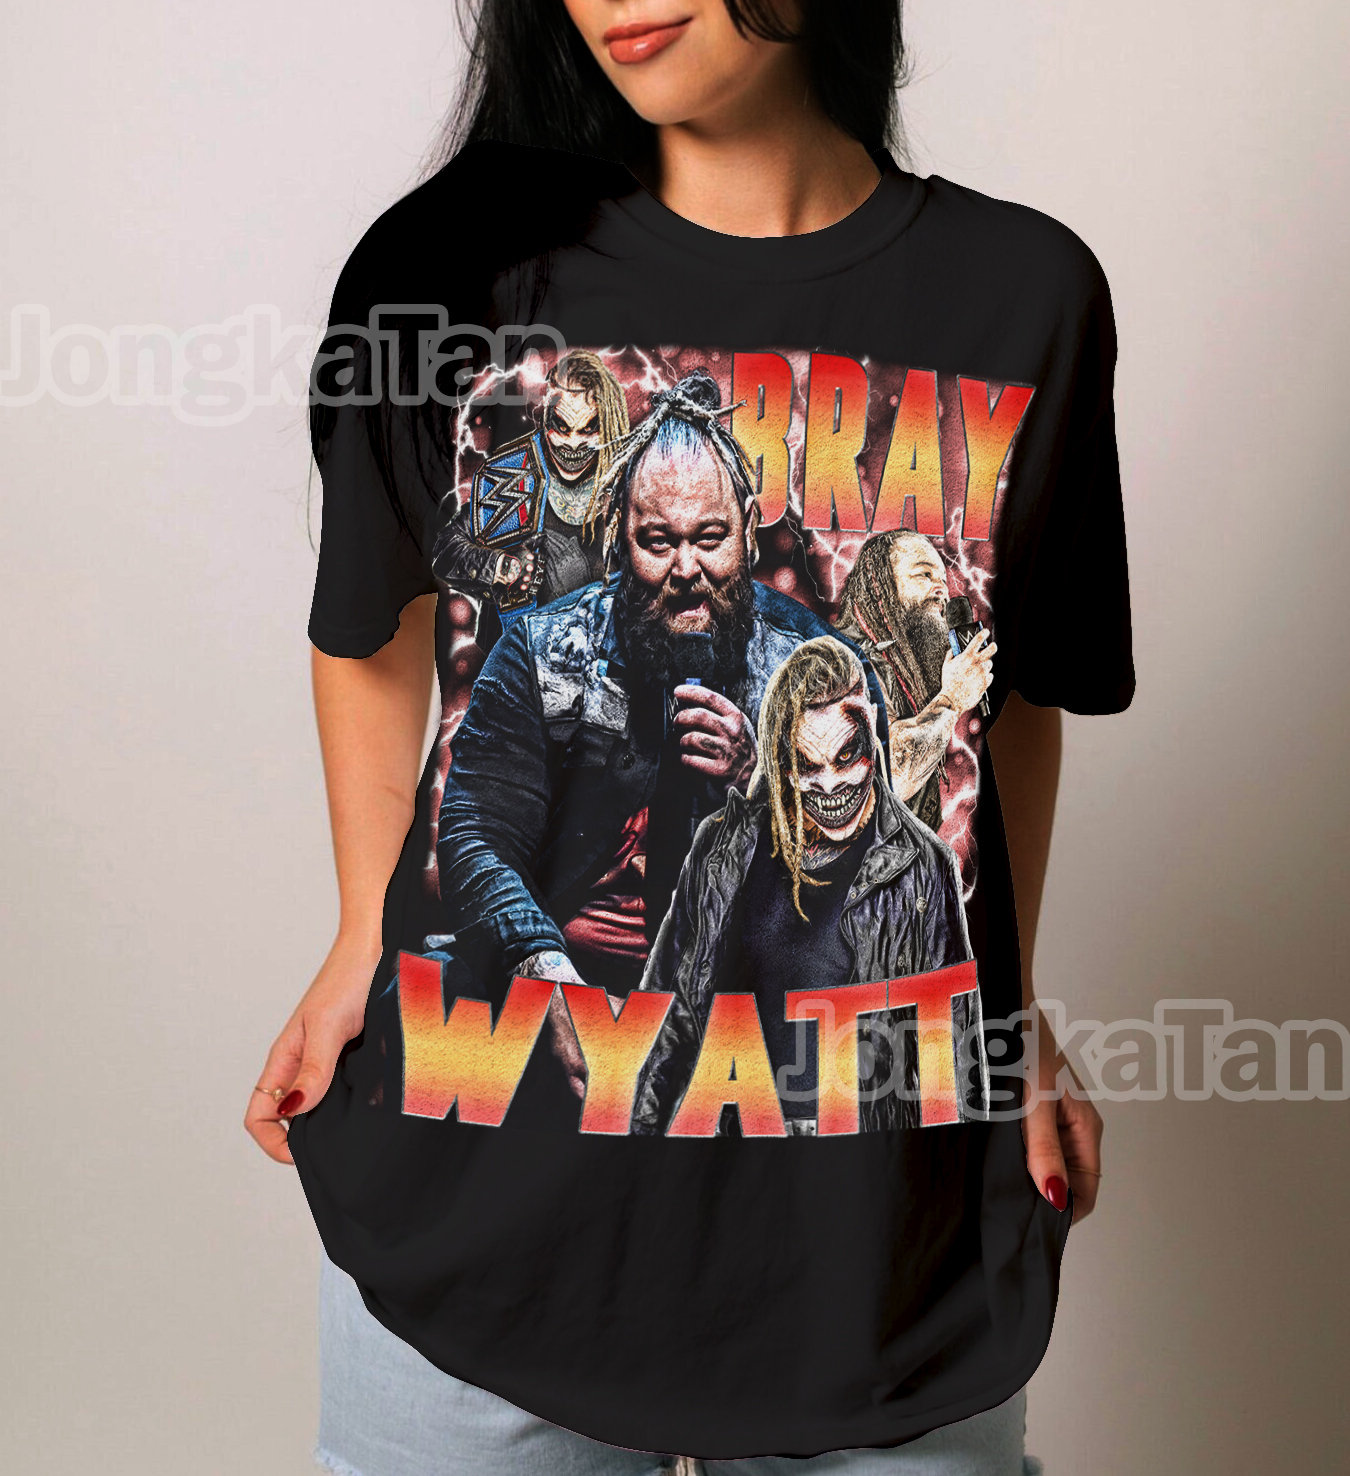 Bray Wyatt Shirt 